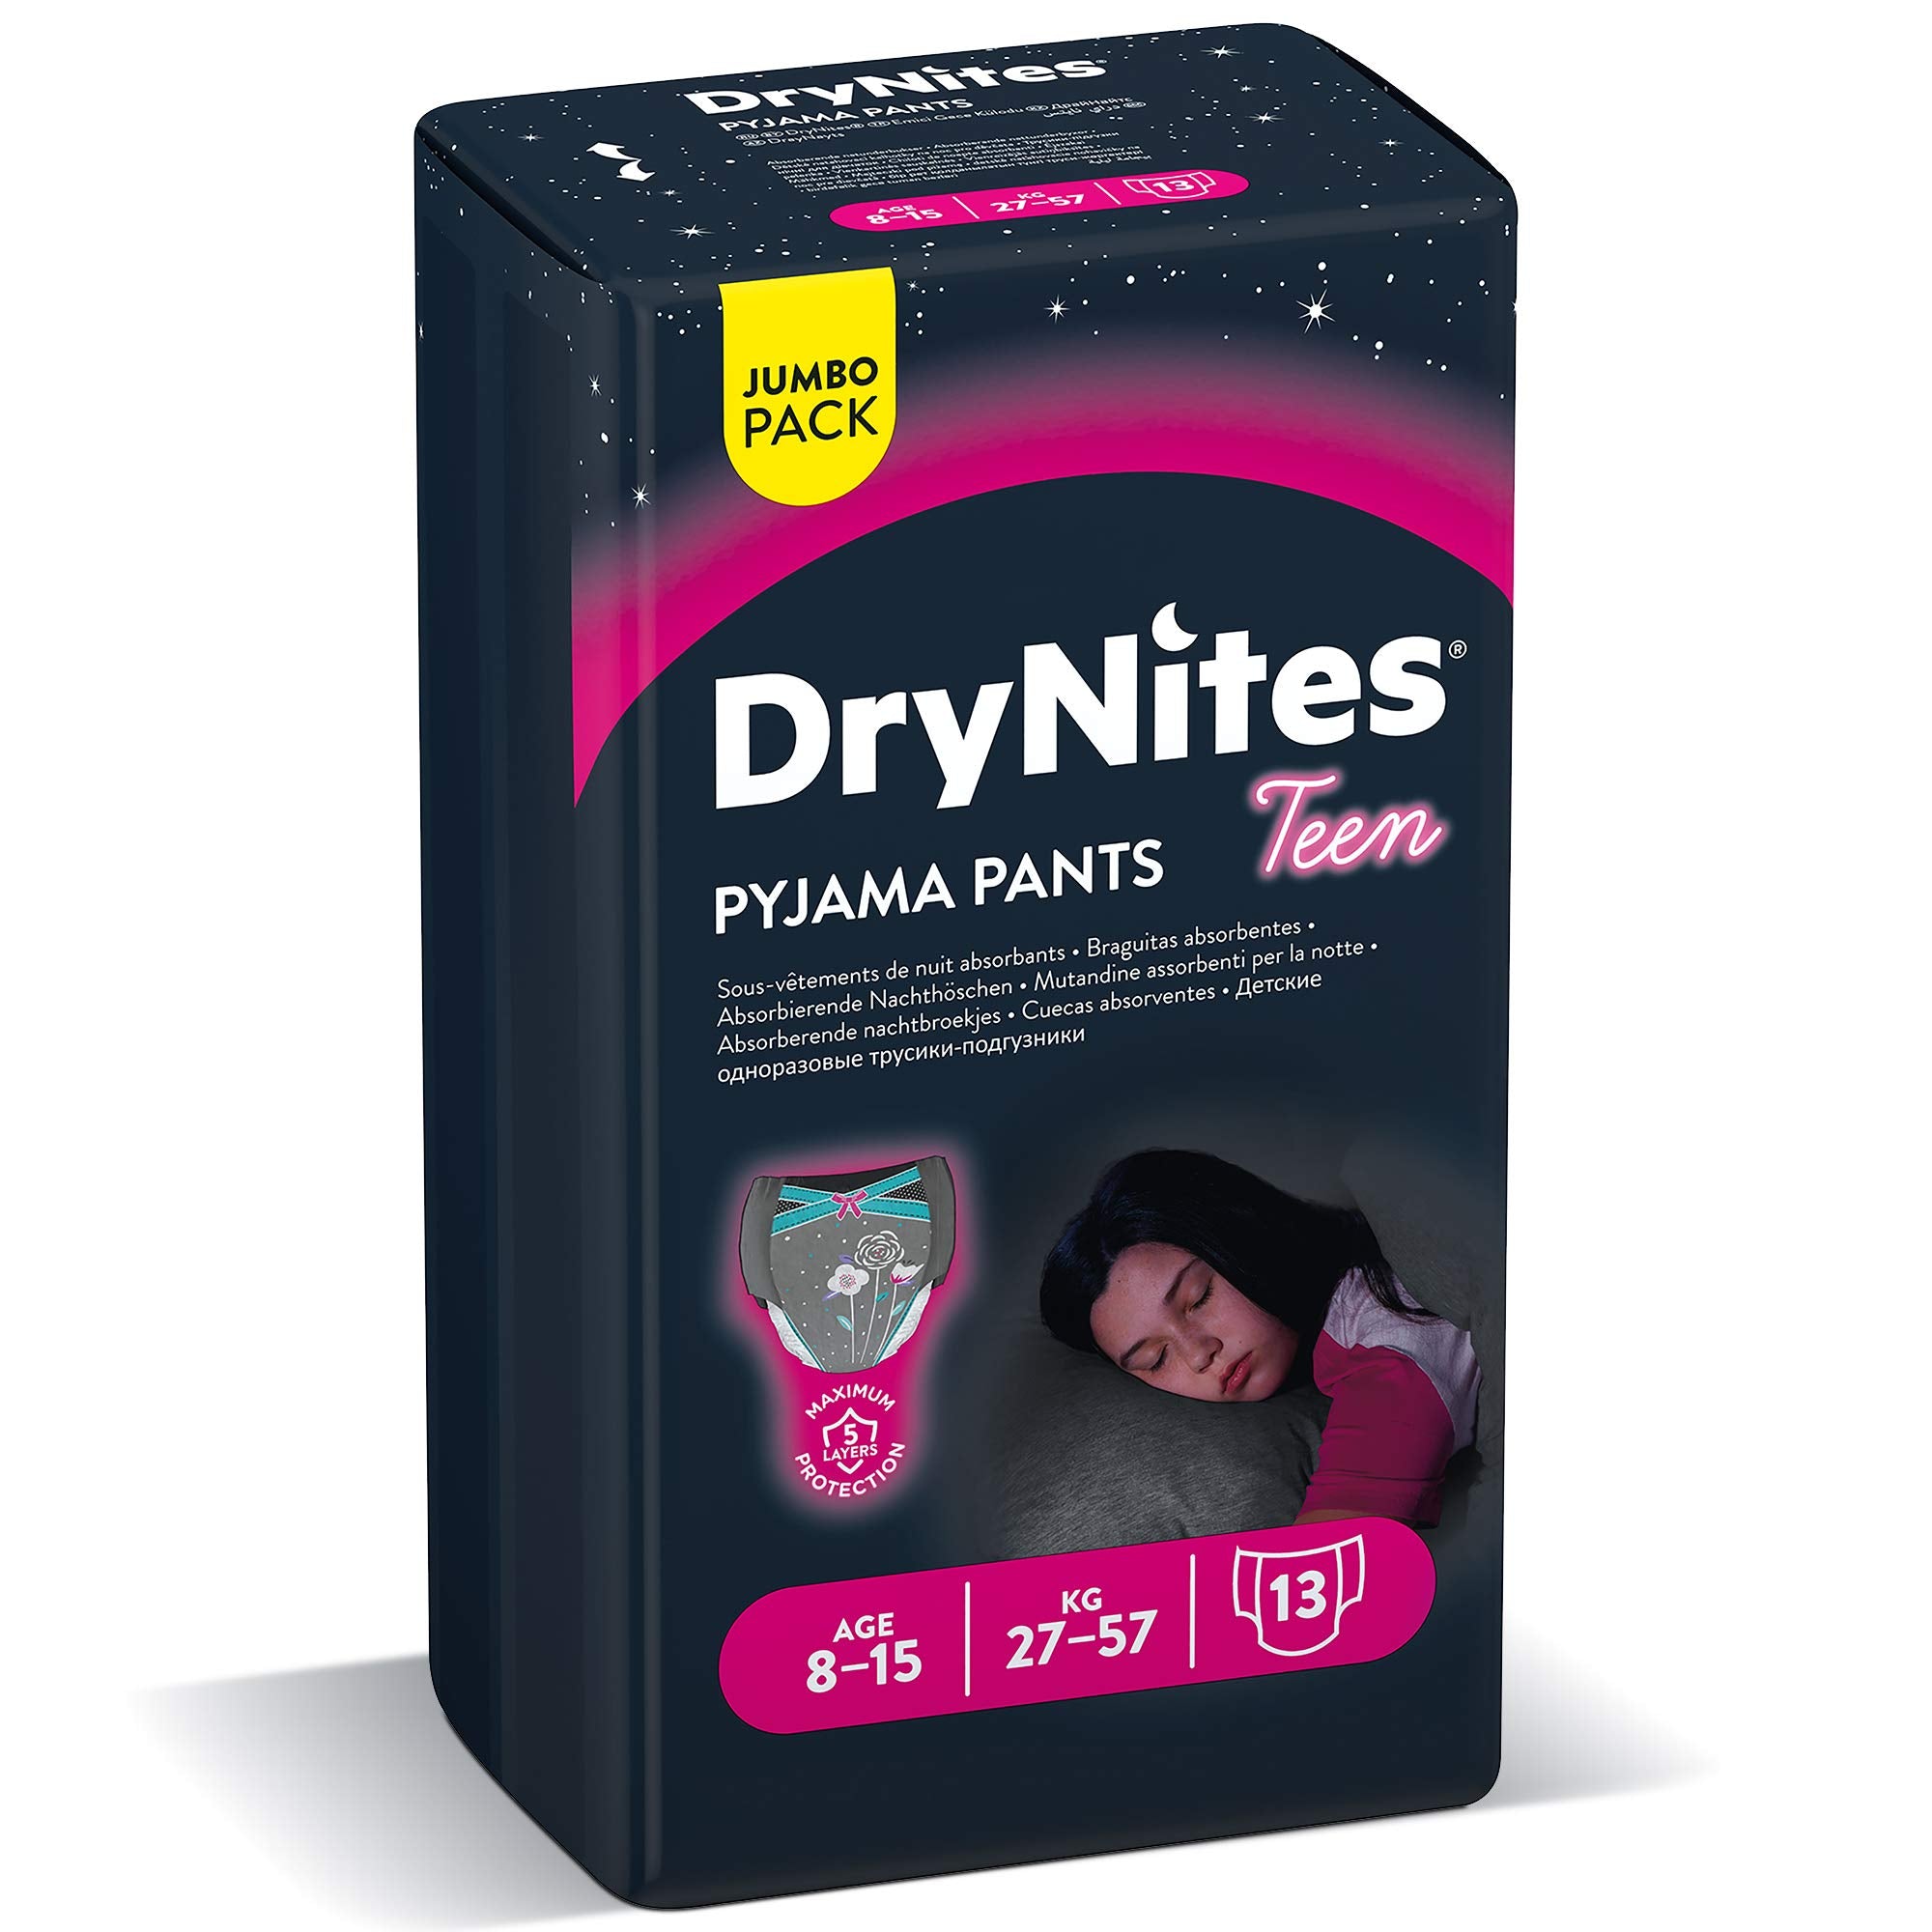 Drynites Pyjama Pants, Age 8-15 Y, Girl, 27-57 Kg, 13 Bed Wetting Pants دراي نايتس بنطلون بيجامة، لعمر 8-15 سنة، للبنات، 27-57 كغم، 13 سروال للترطيب في السرير